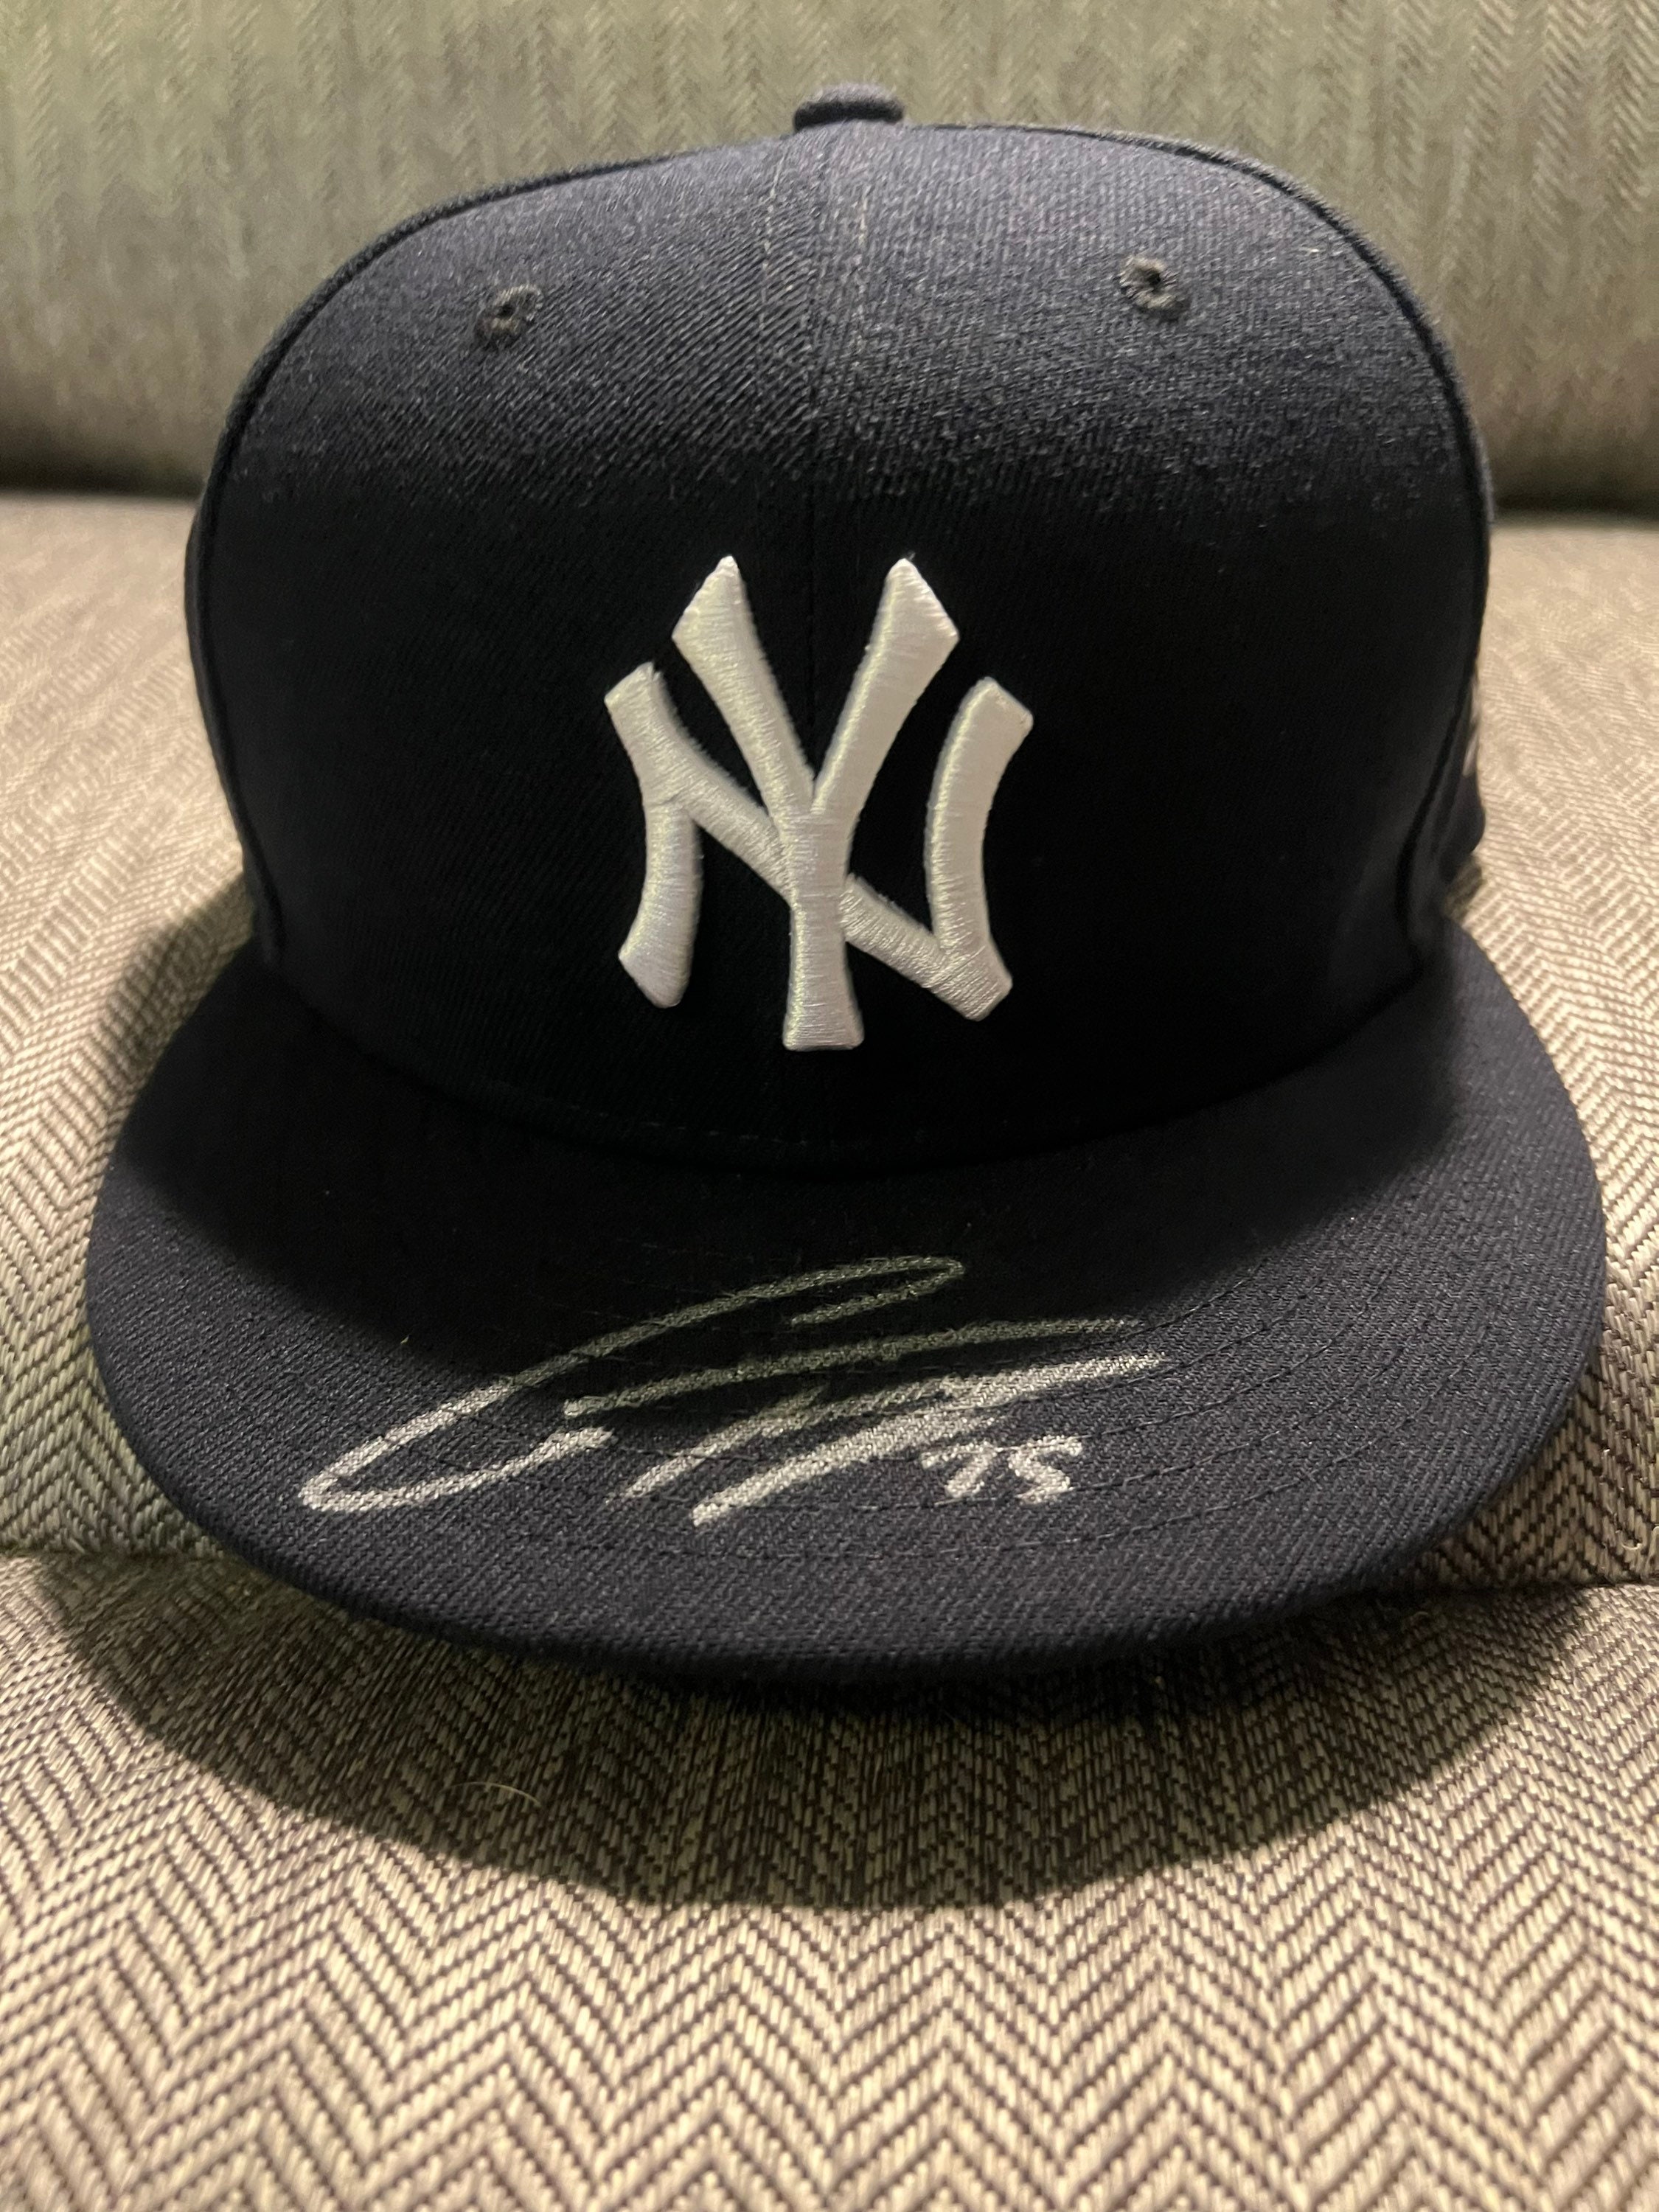 Fanatics Authentic Gleyber Torres New York Yankees Autographed Black Leather Baseball